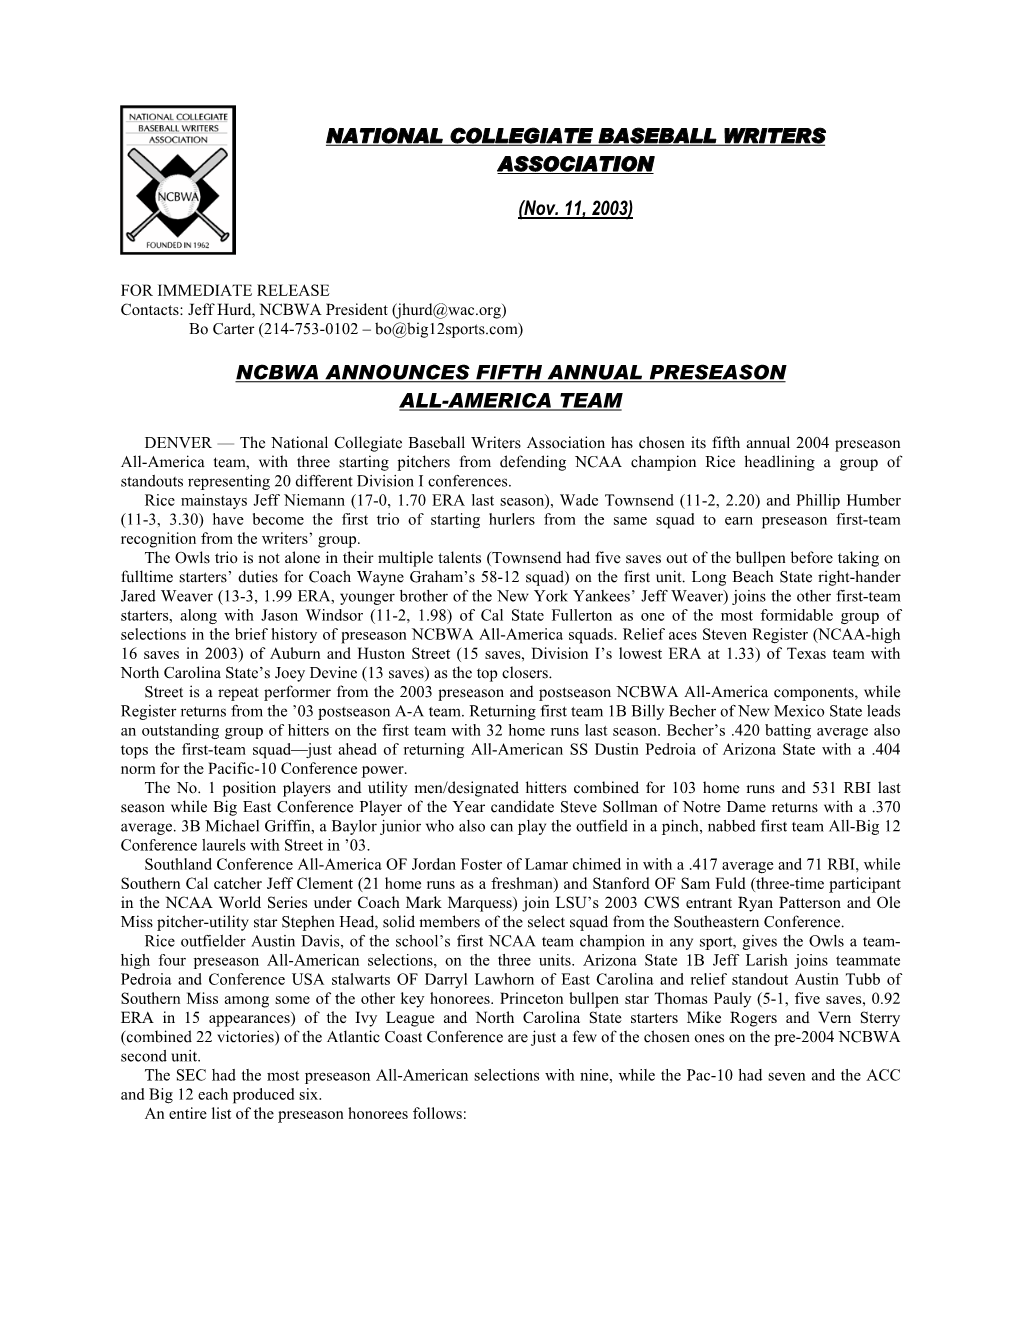 NATIONAL COLLEGIATE BASEBALL WRITERS ASSOCIATION (Nov. 11, 2003) NCBWA ANNOUNCES FIFTH ANNUAL PRESEASON ALL-AMERICA TEAM